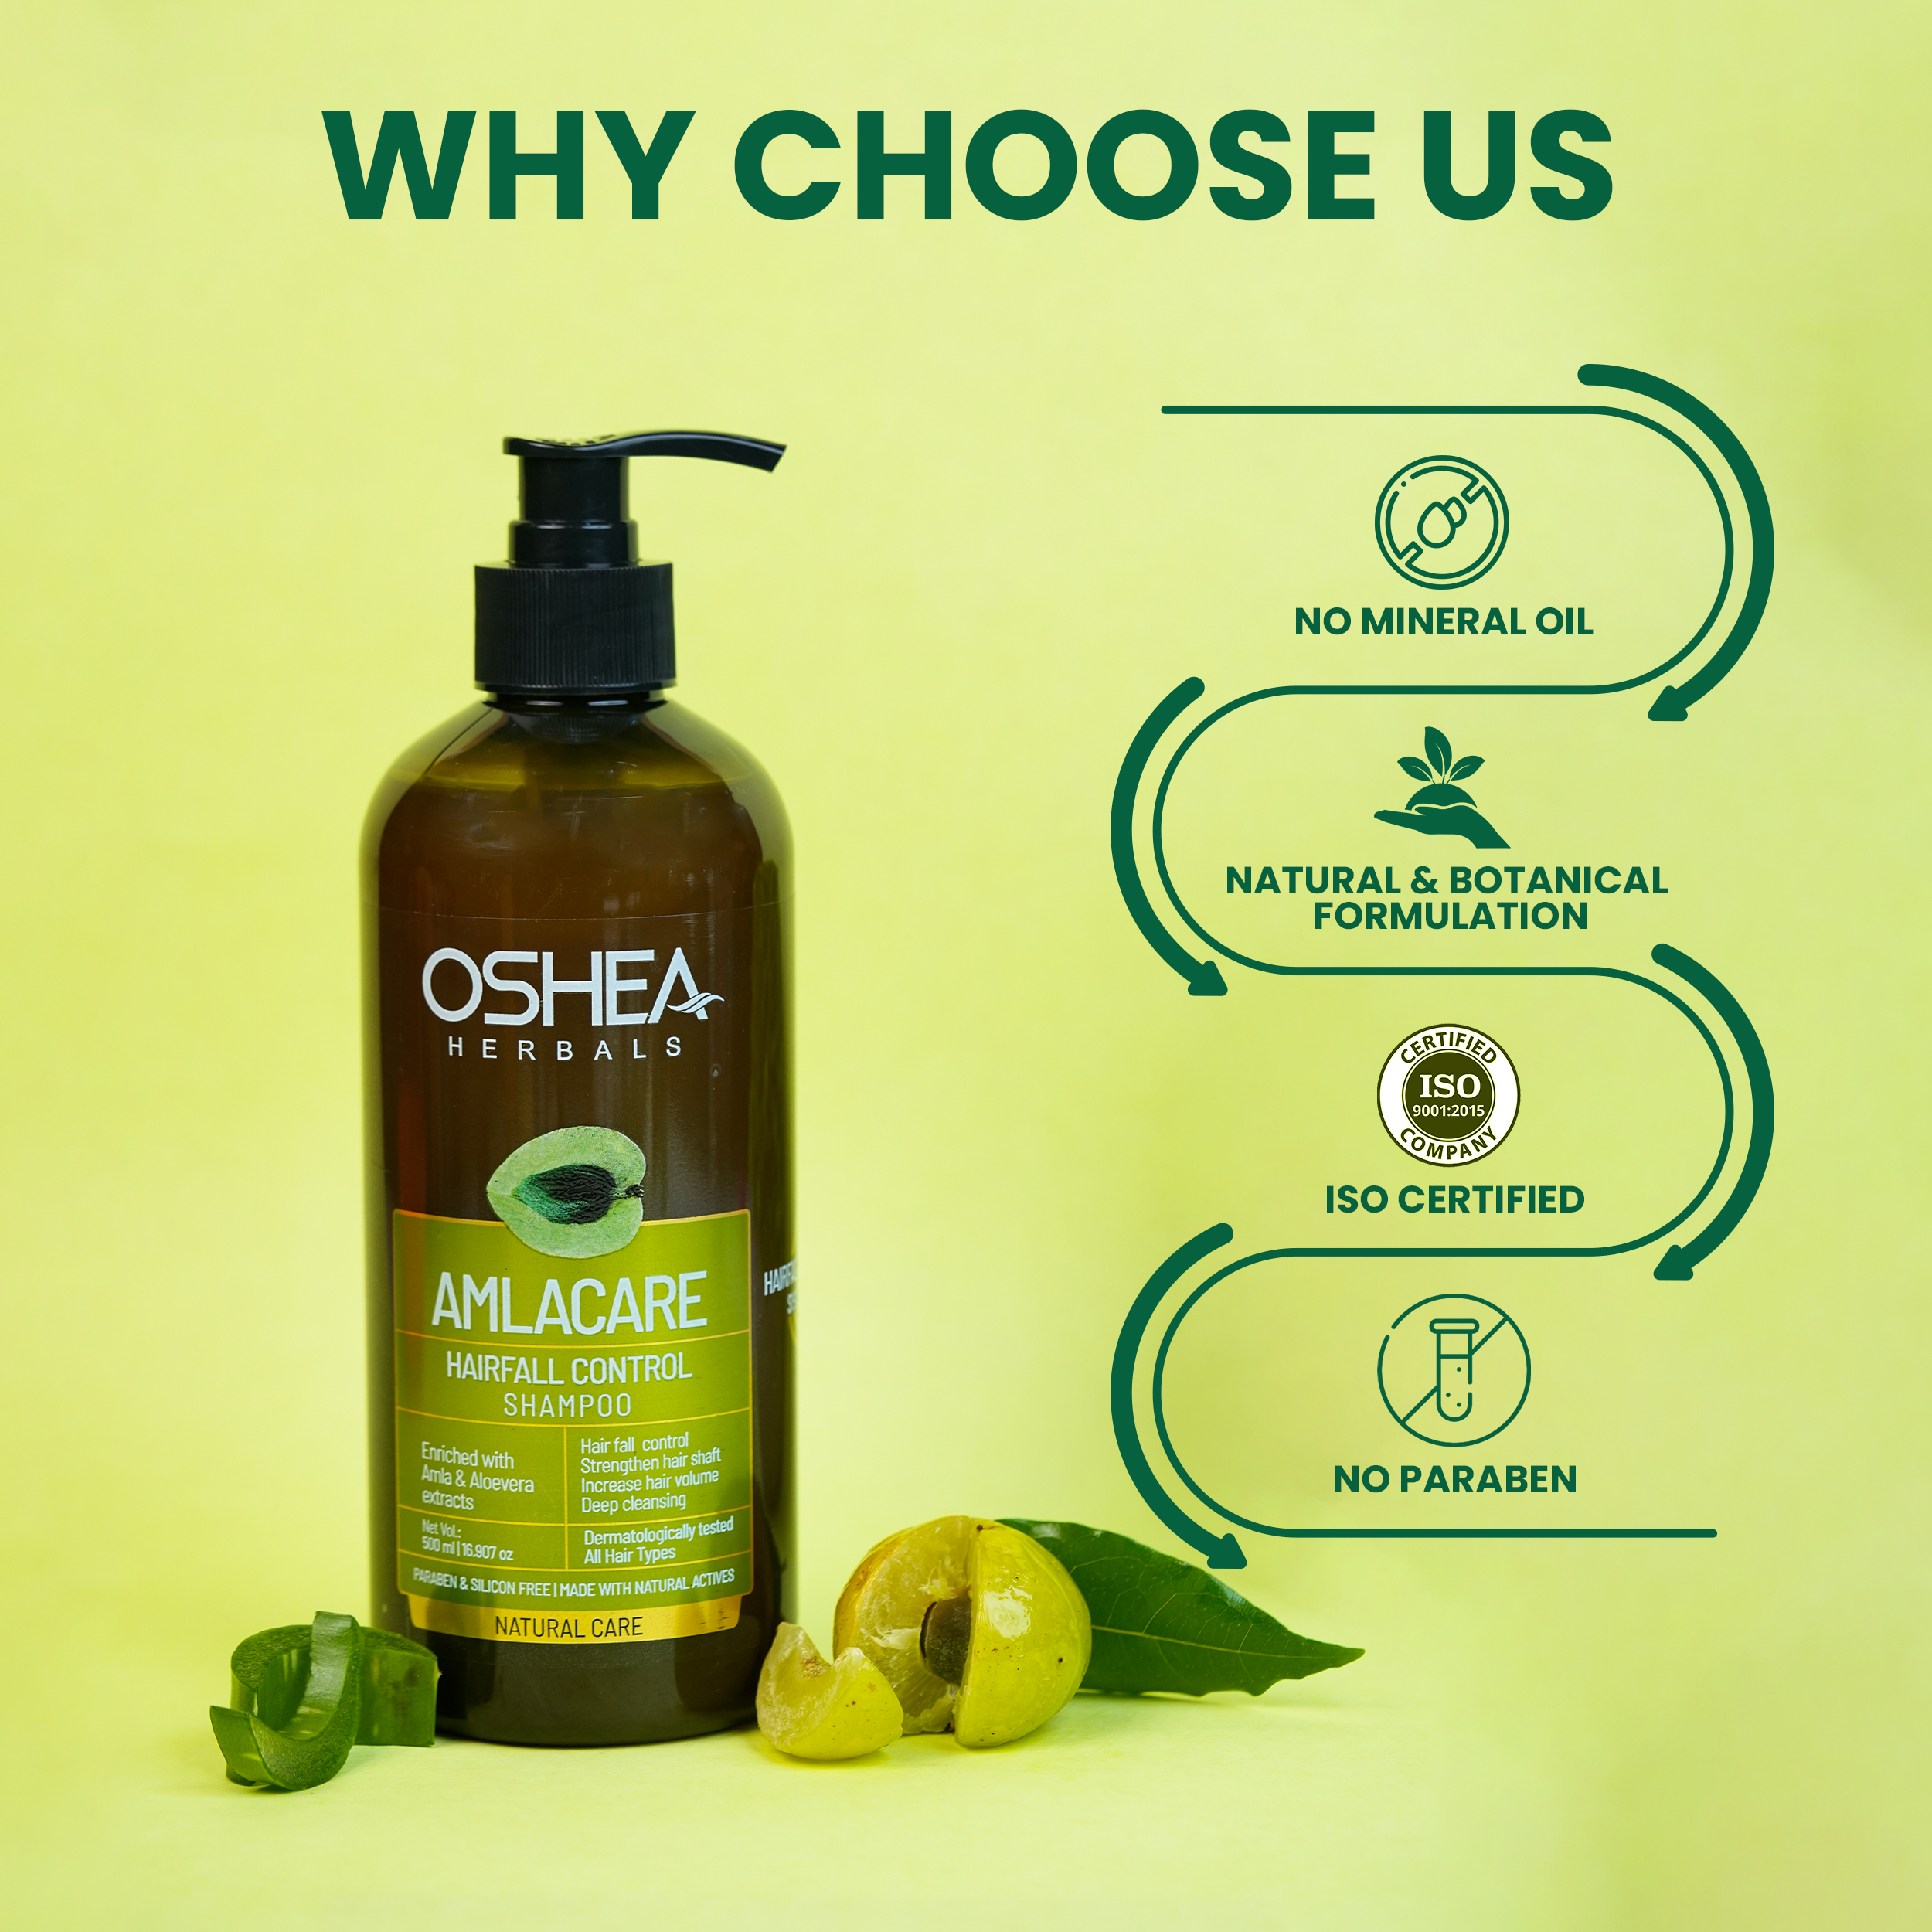 Why Choose Us AmlaCare Hairfall control Shampoo Oshea Herbals